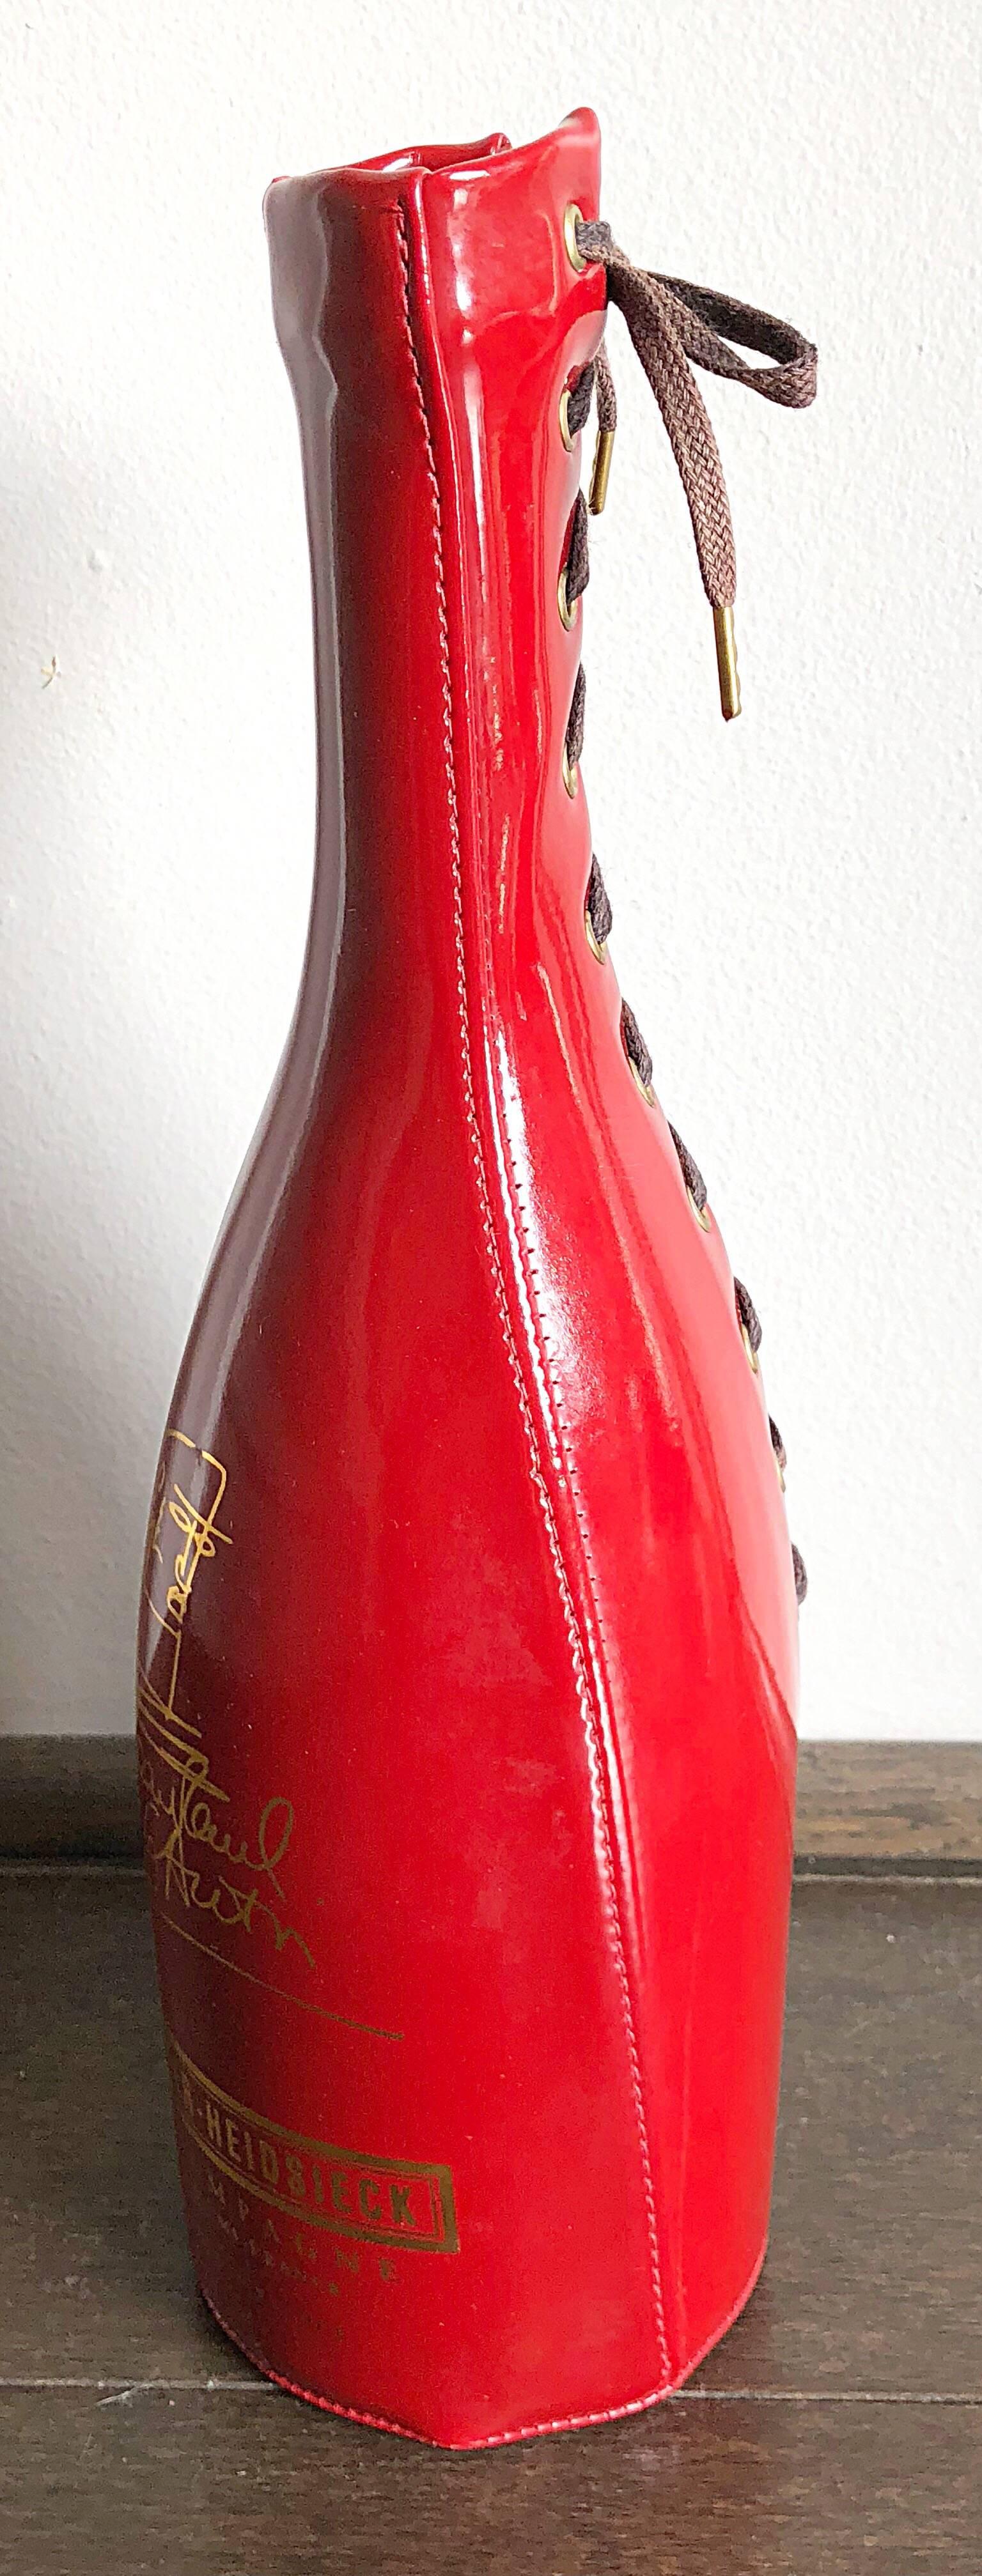 Jean Paul Gaultier For Piper Heidsieck Corset Champagne Bottle Holder, 1990 For Sale 2